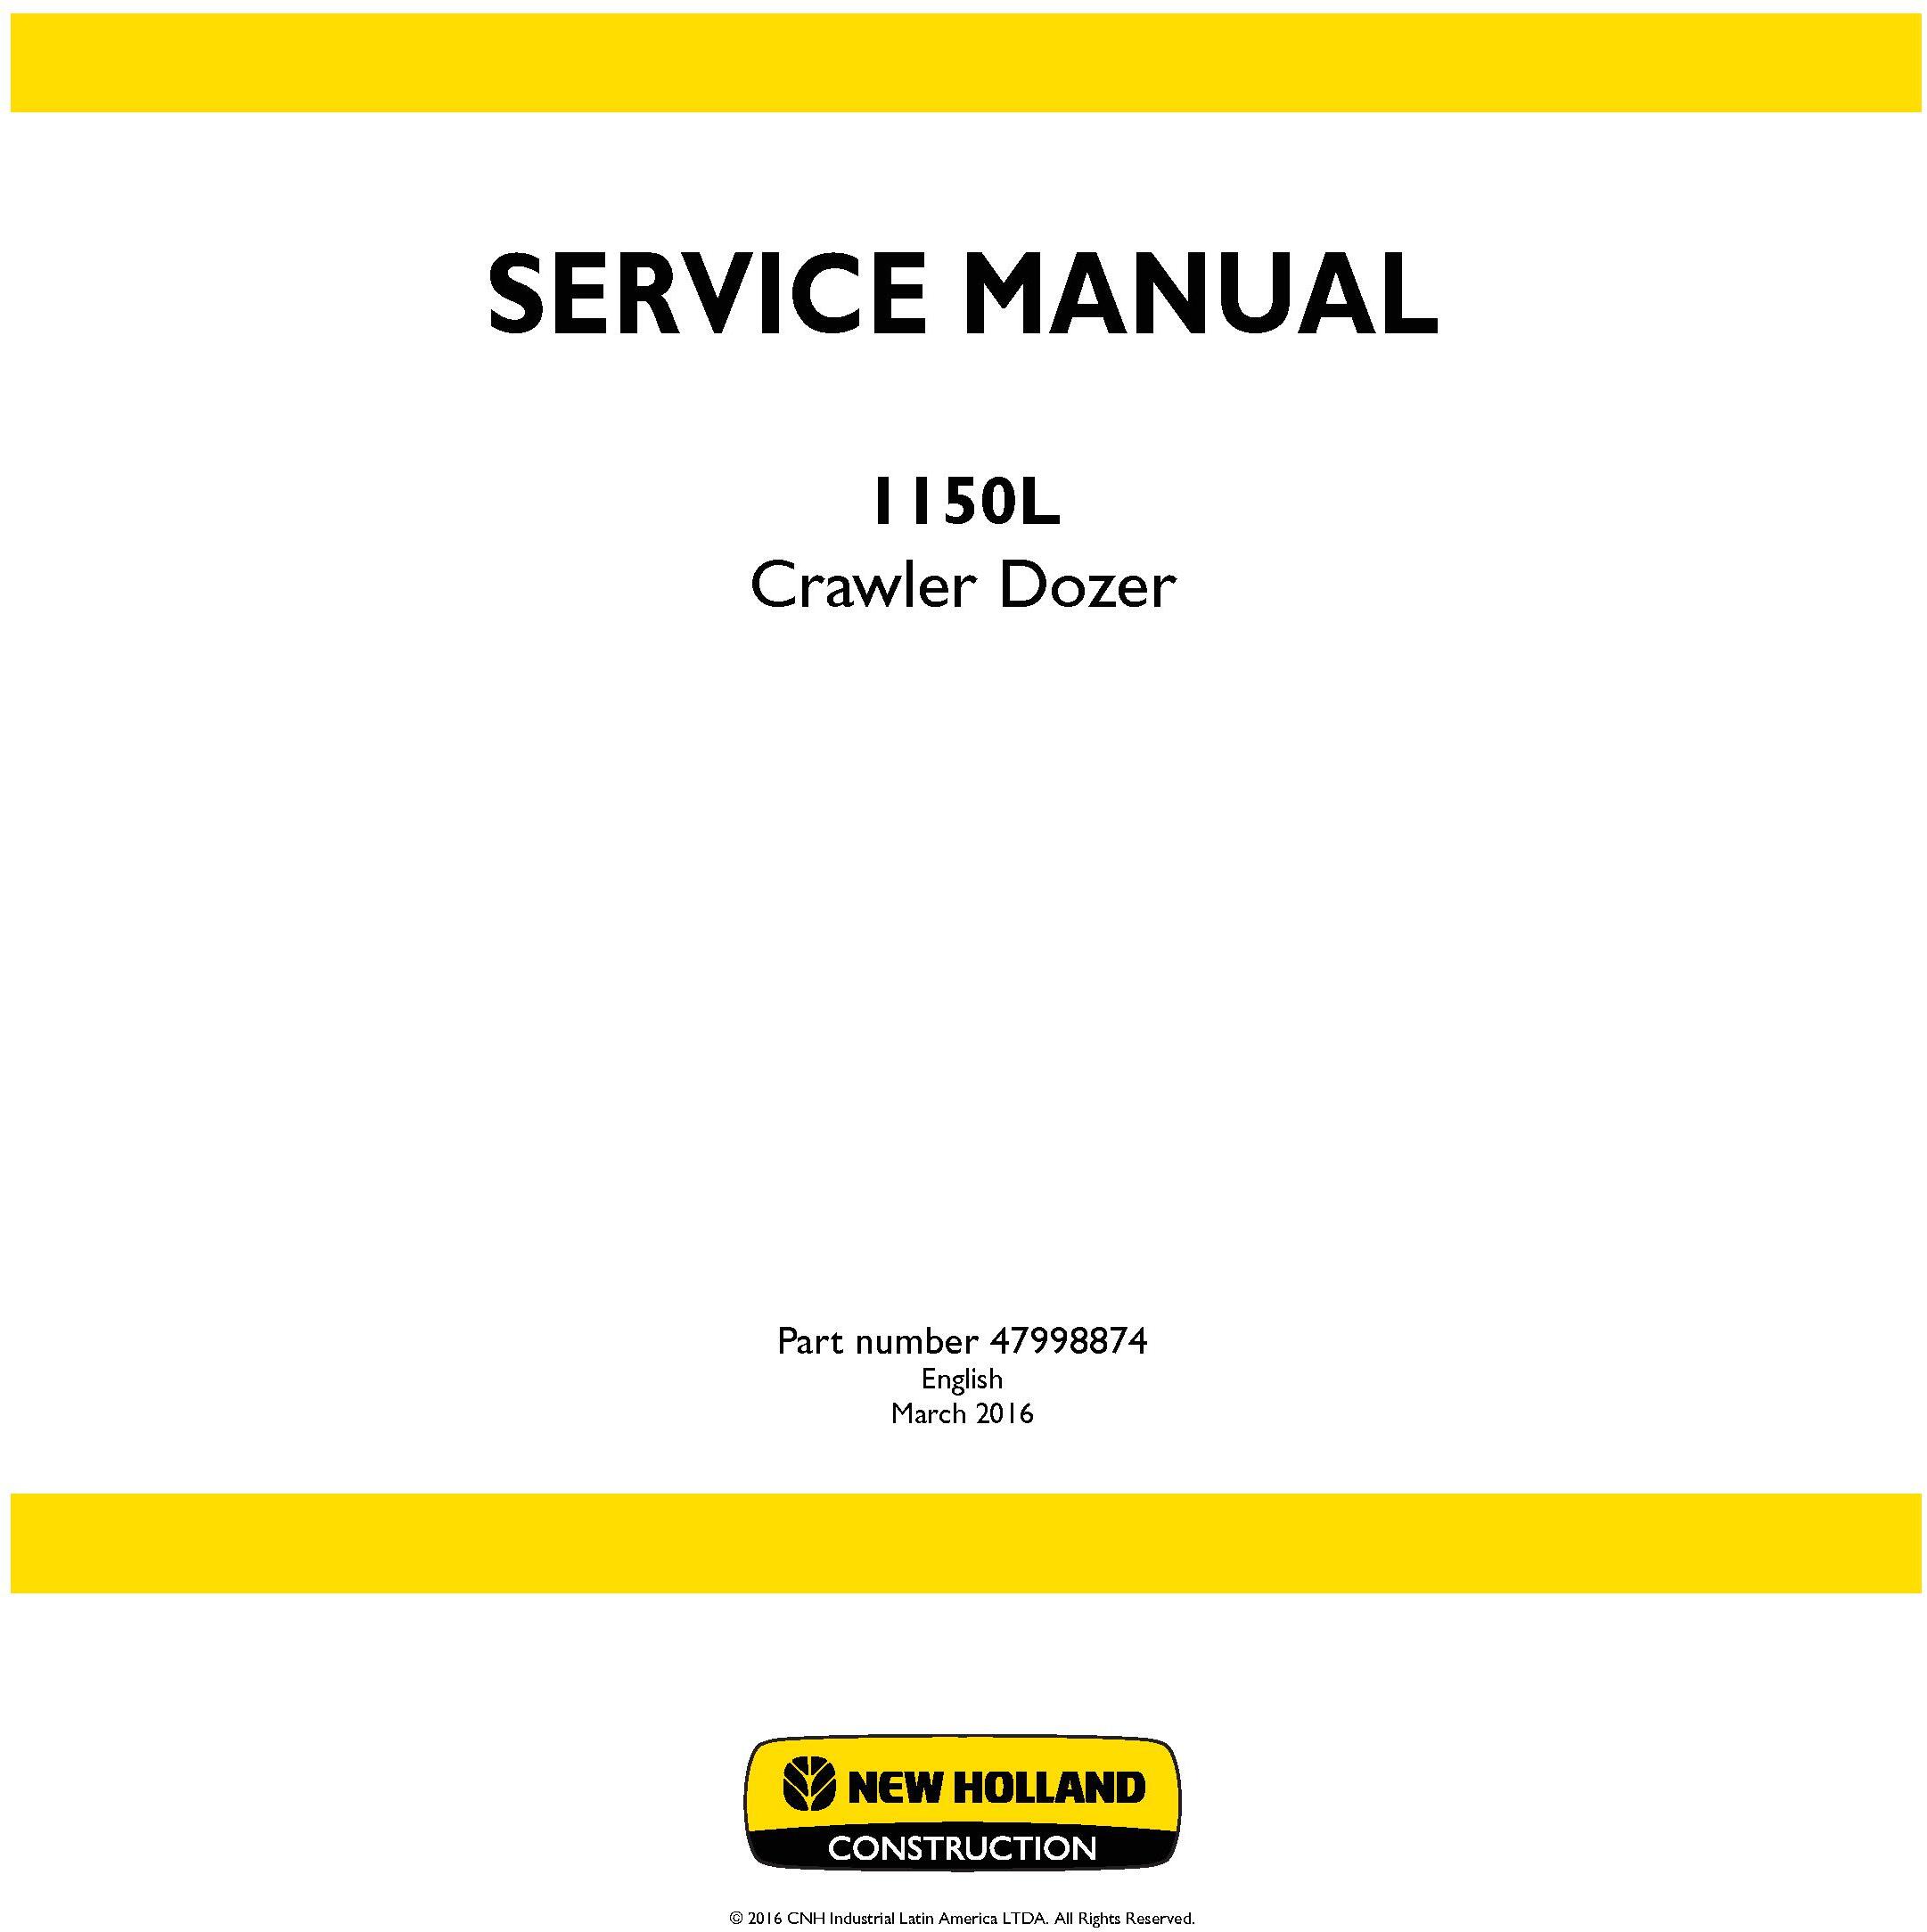 New Holland , Case 1150L Crawler dozer Service Manual - 19644